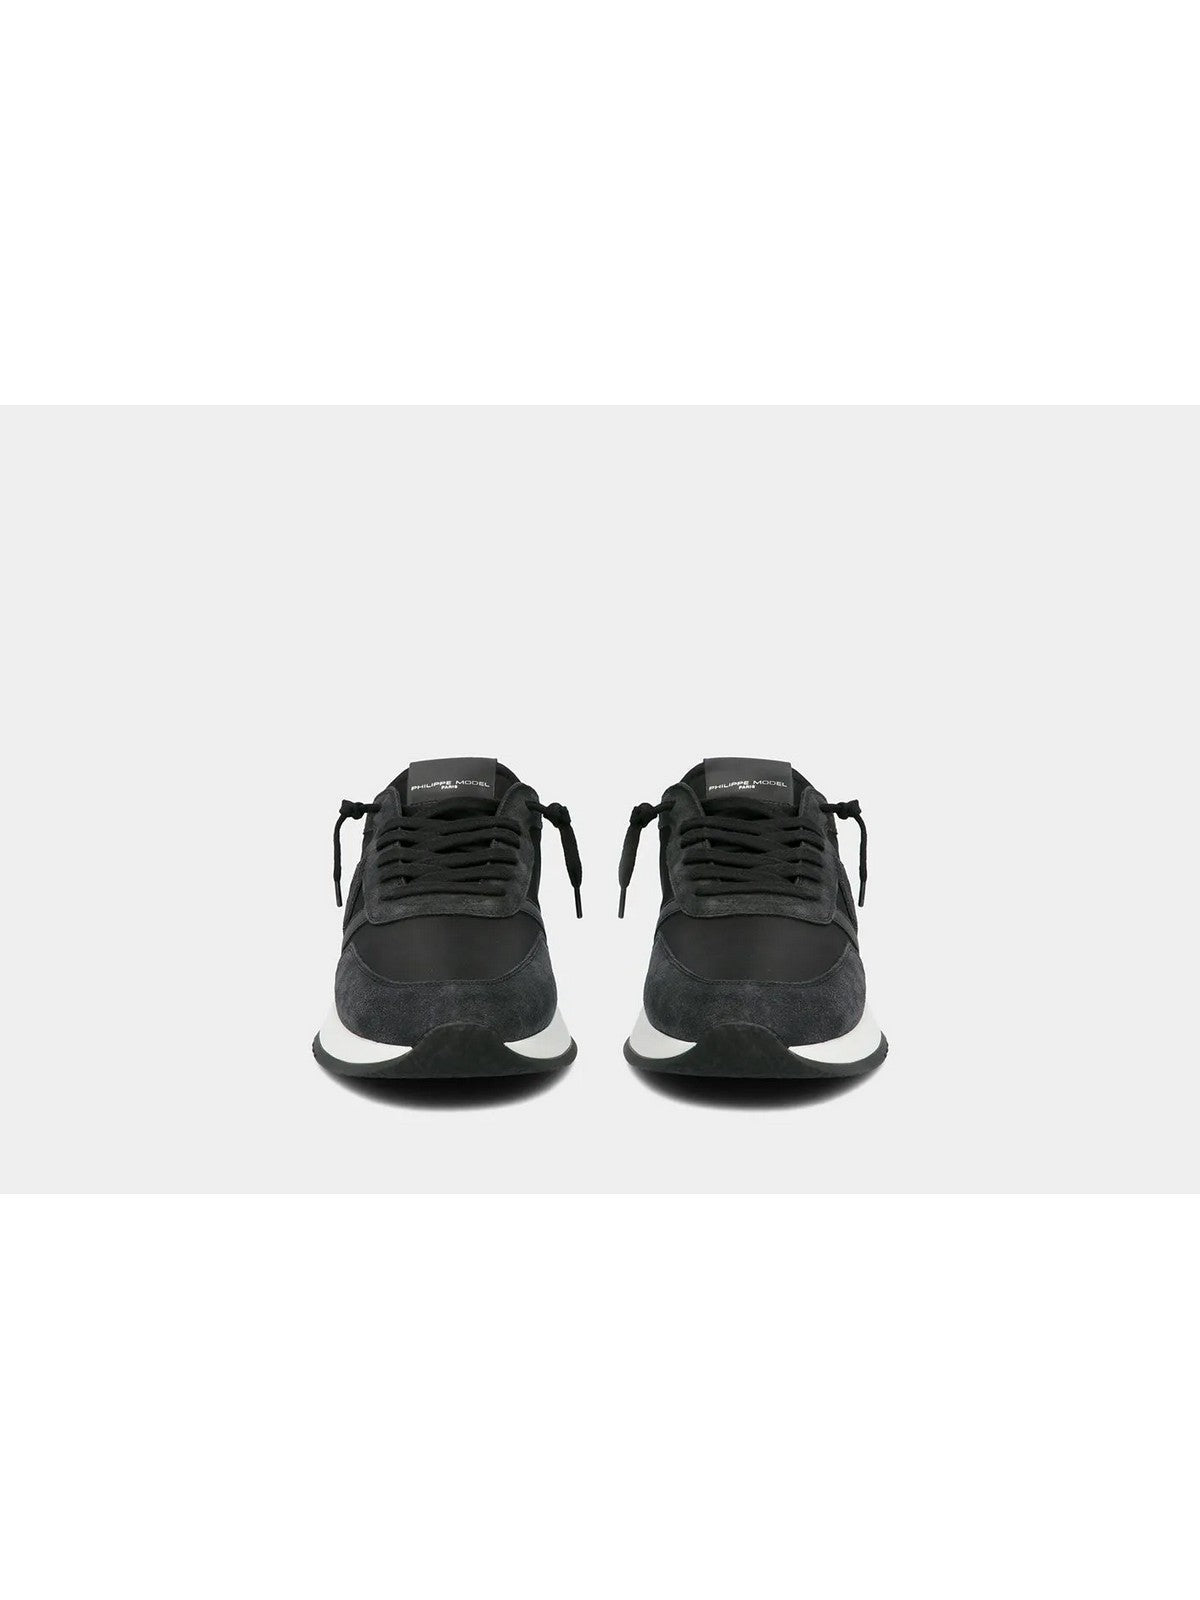 PHILIPPE MODEL Homme Chaussures Tropez 2.1 TYLU W002 Noir